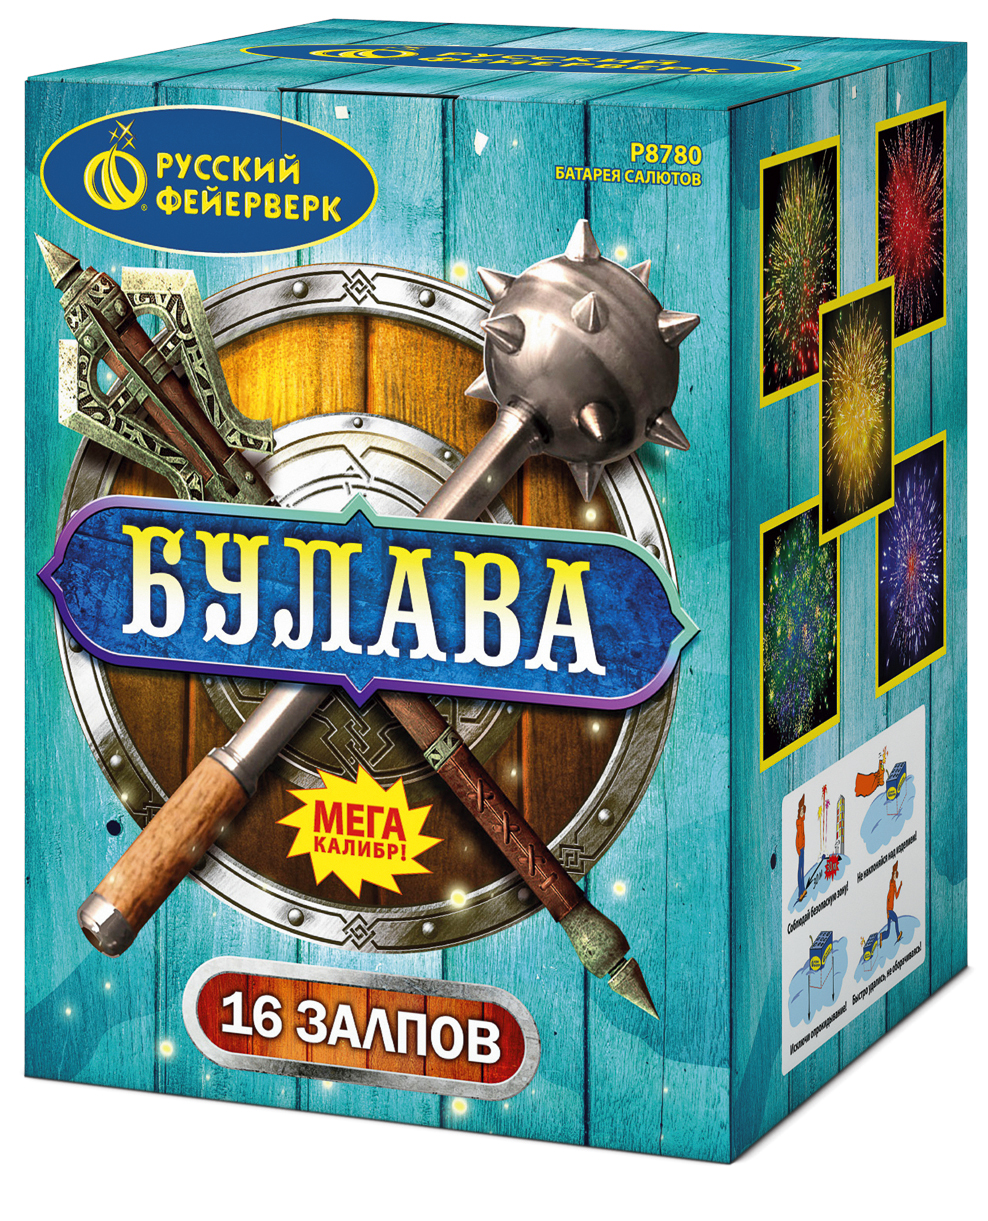 Батарея салютов Русский фейерверк Булава Р8780 165 залпов 2,8 дюймов